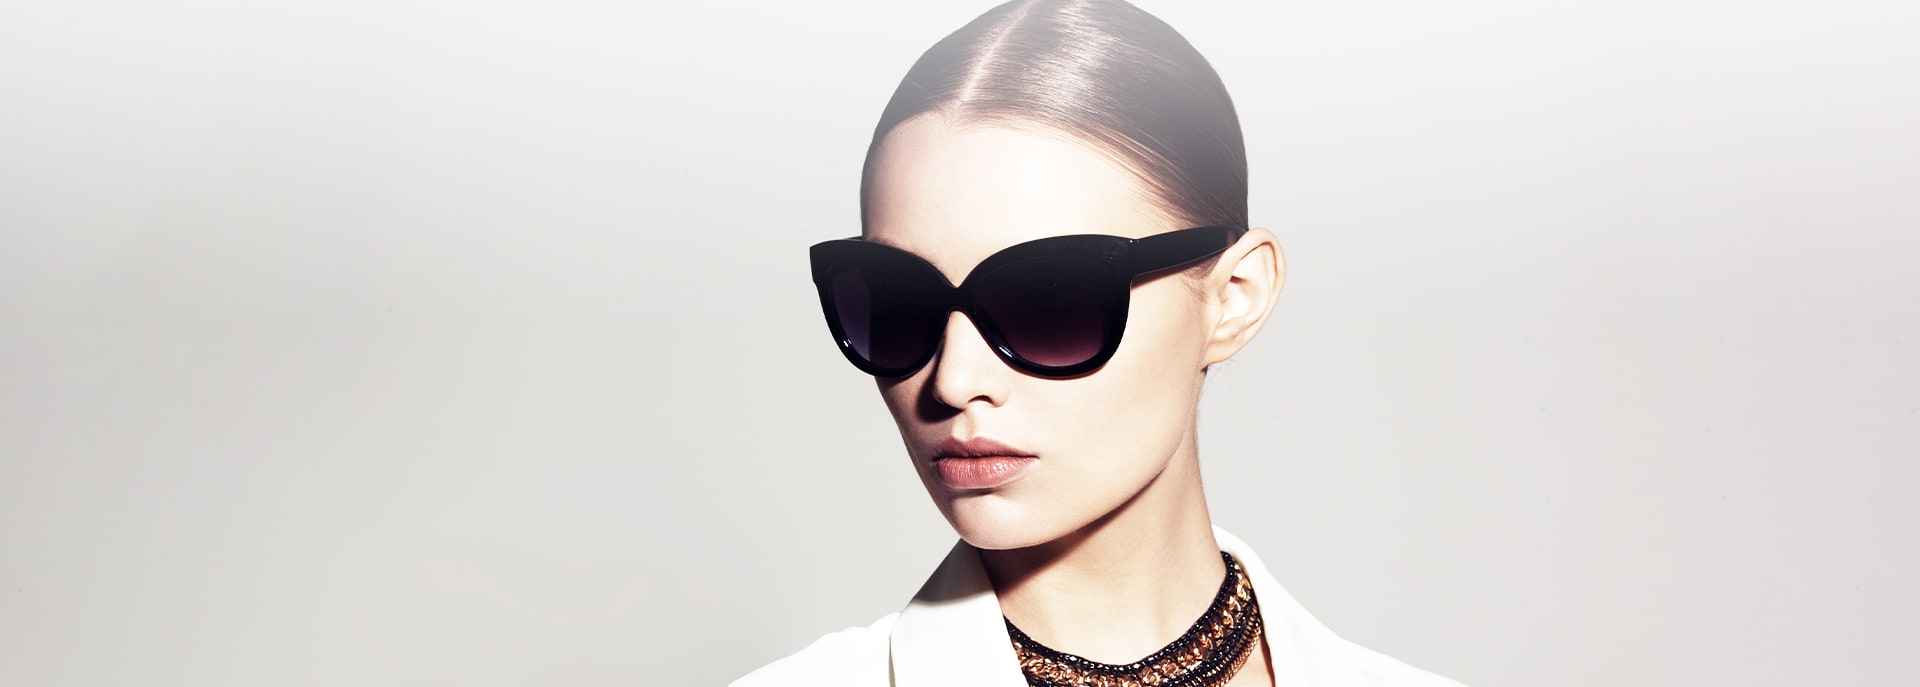 woman wearing sunglasses with prescription lens